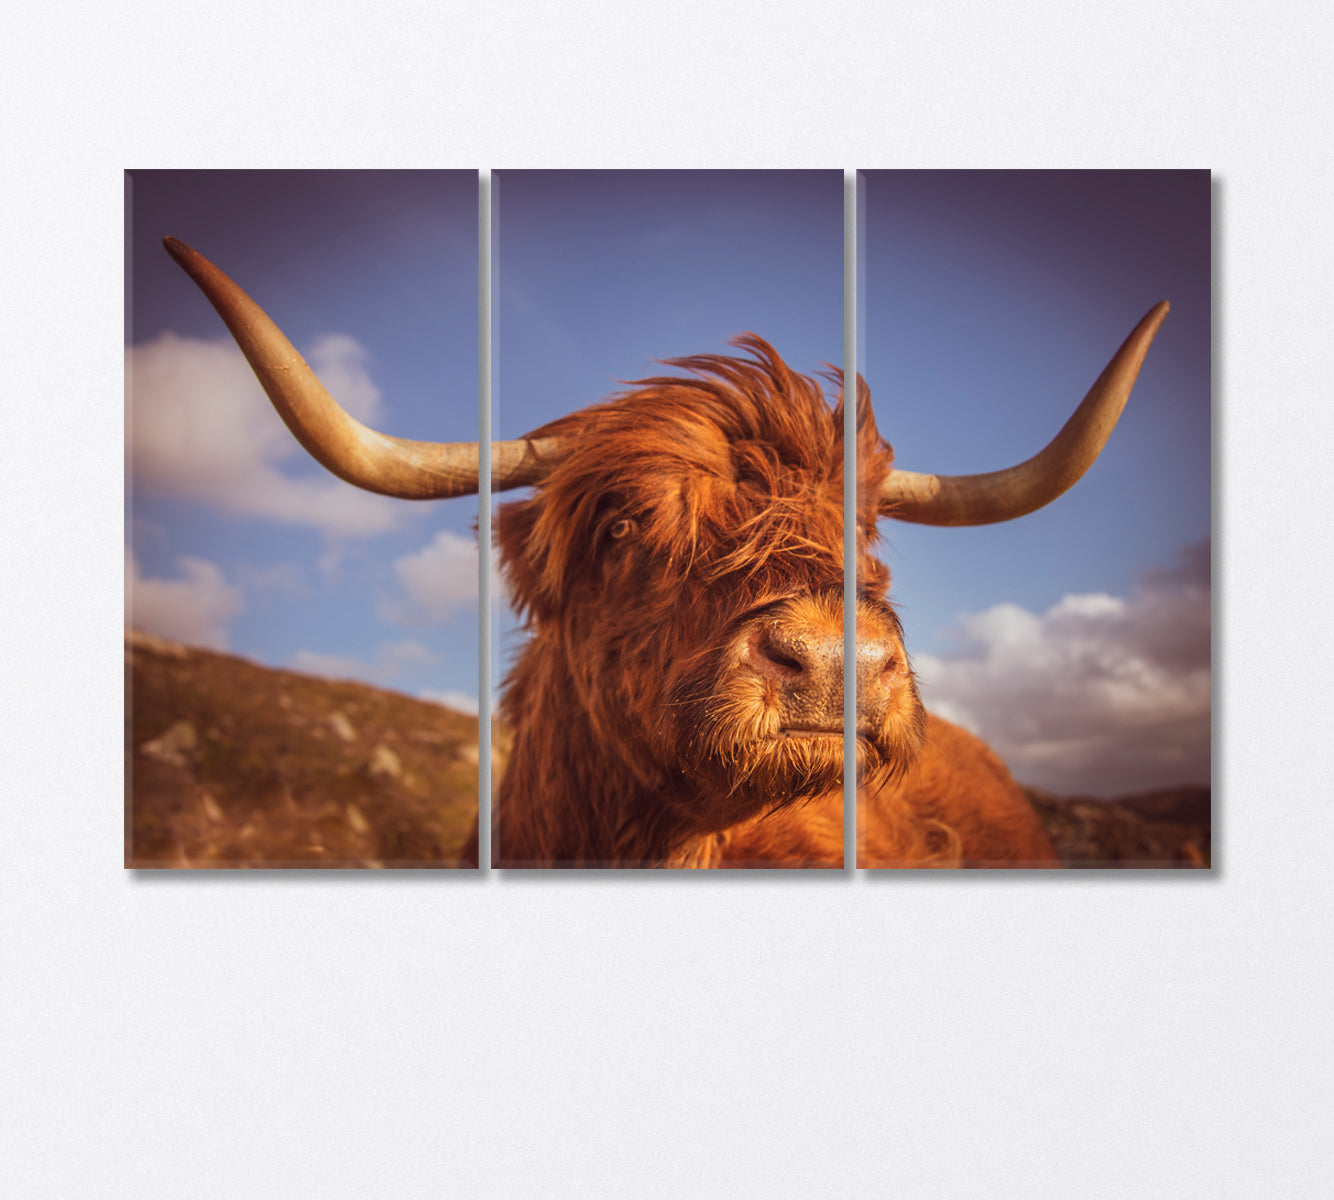 Highland Scottish Cow with Big Horns Canvas Print-Canvas Print-CetArt-3 Panels-36x24 inches-CetArt